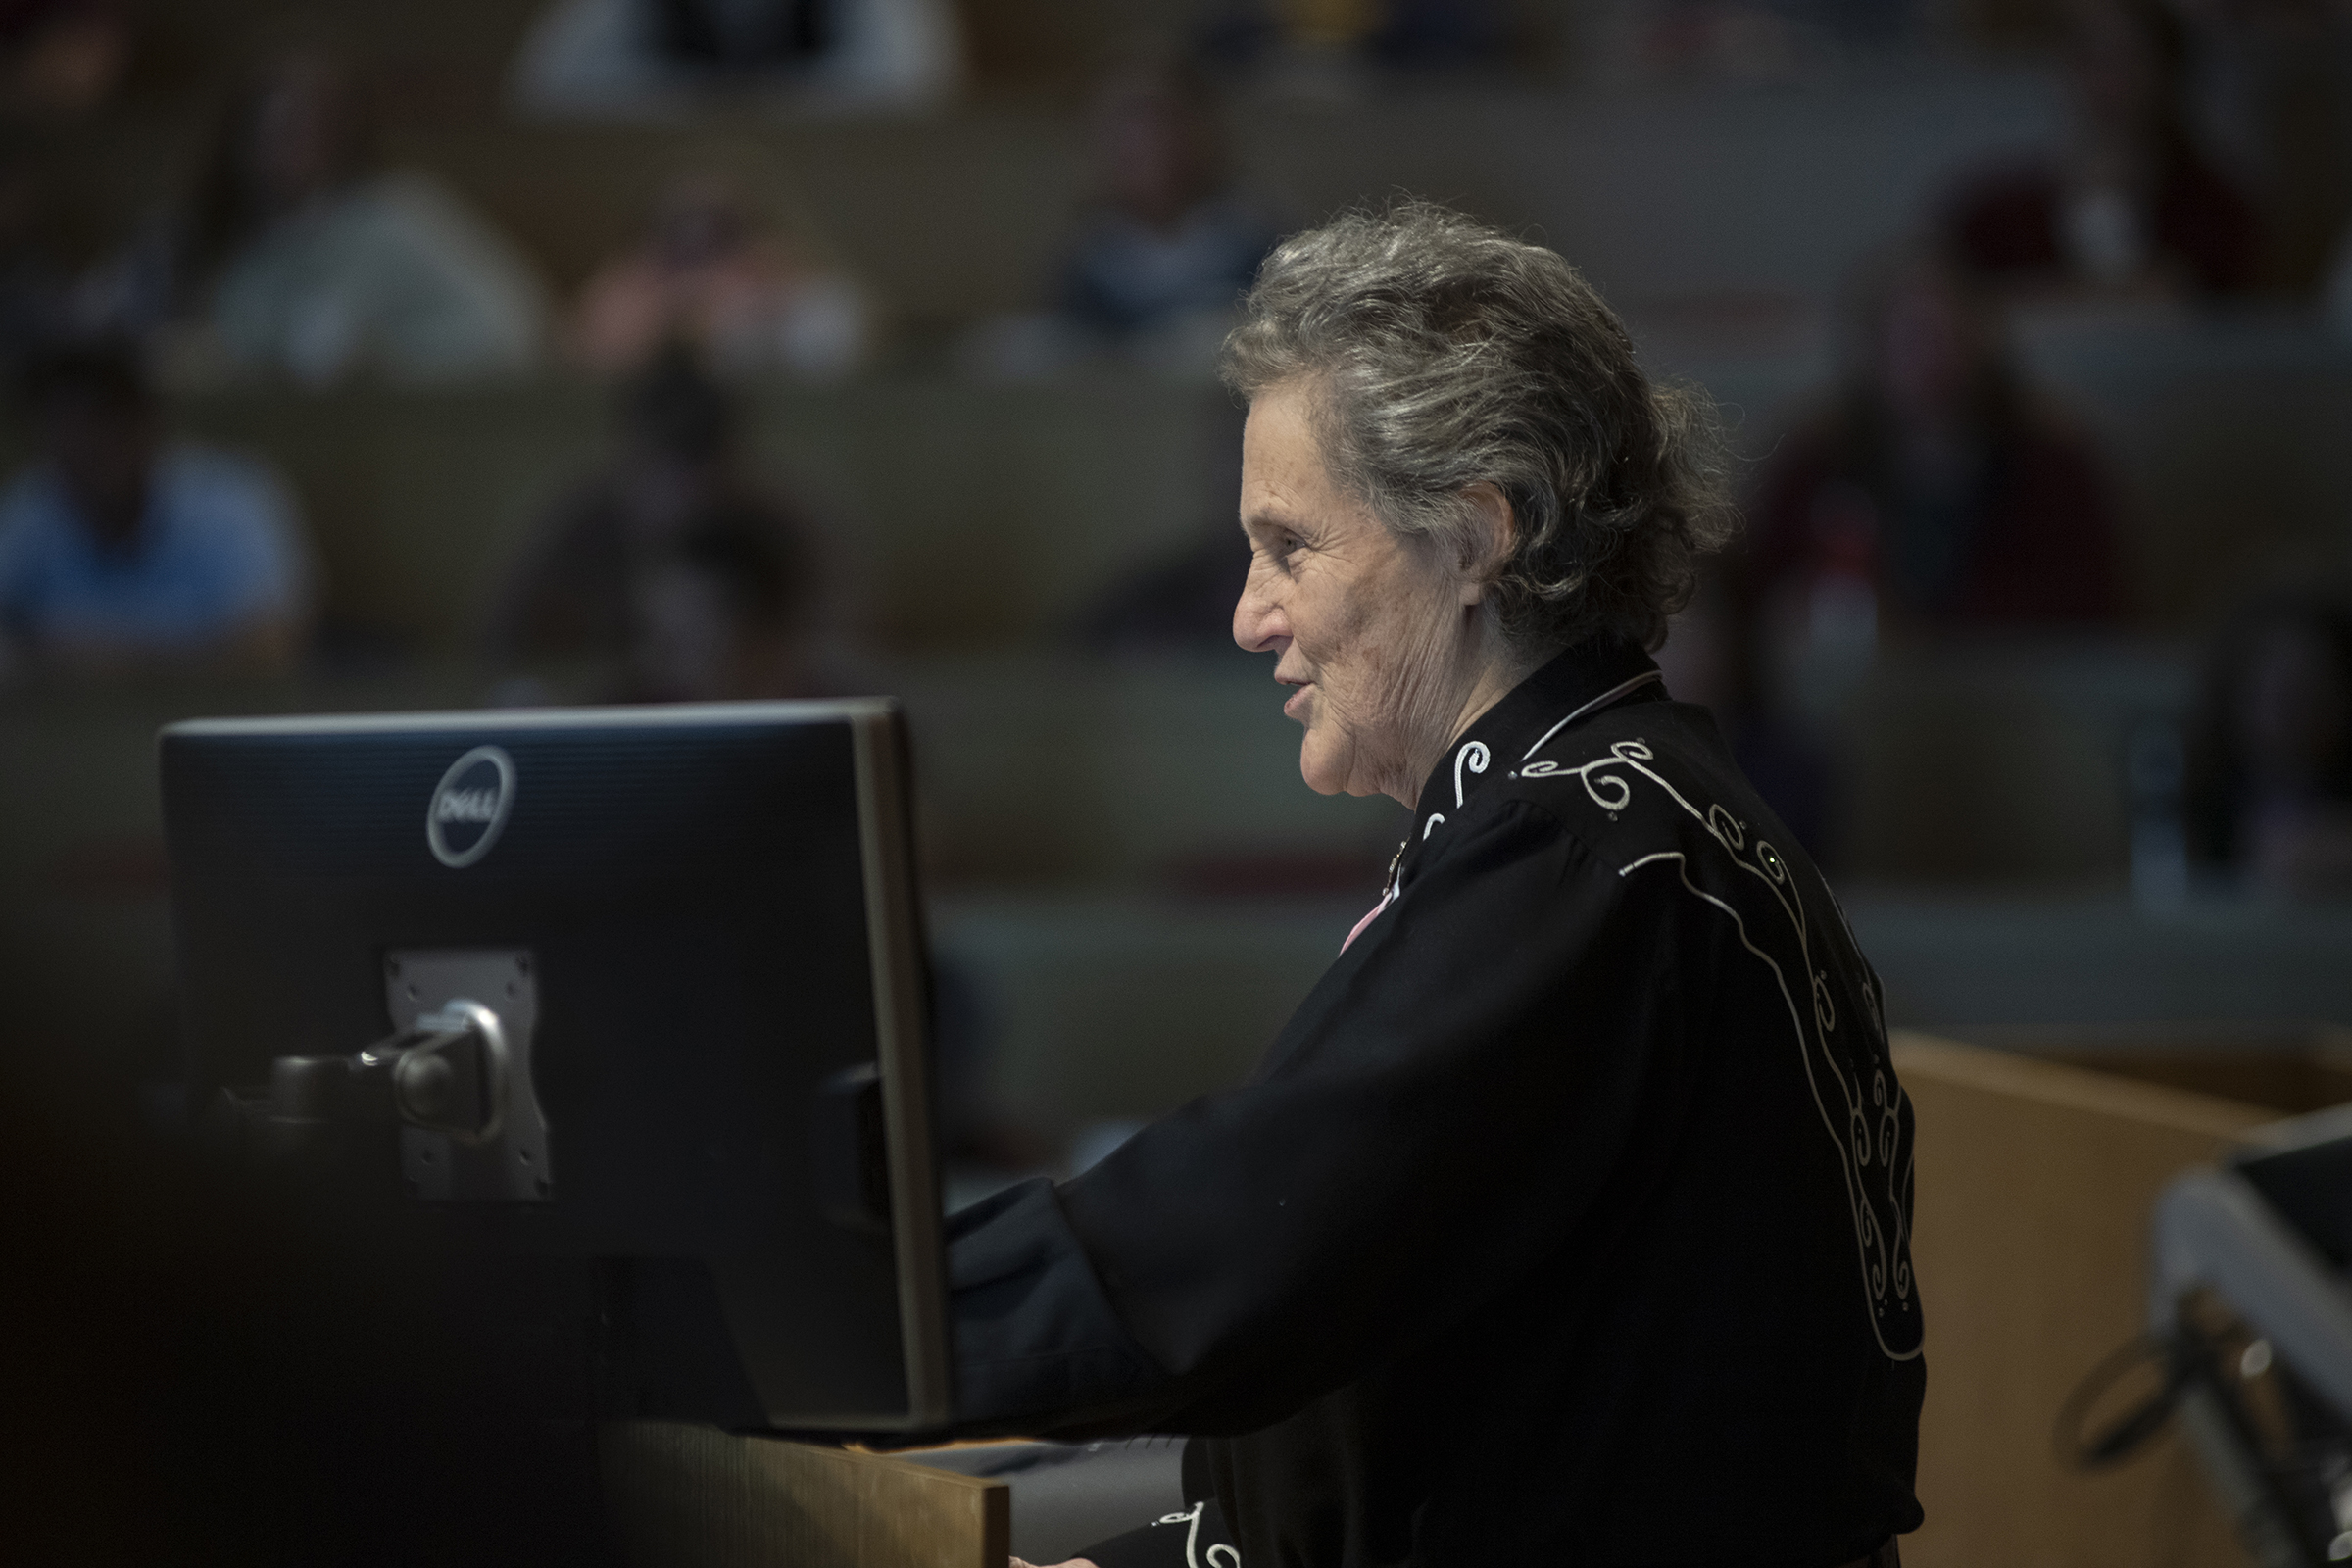 Dr. Temple Grandin speaks at the Cornell Veterinary College